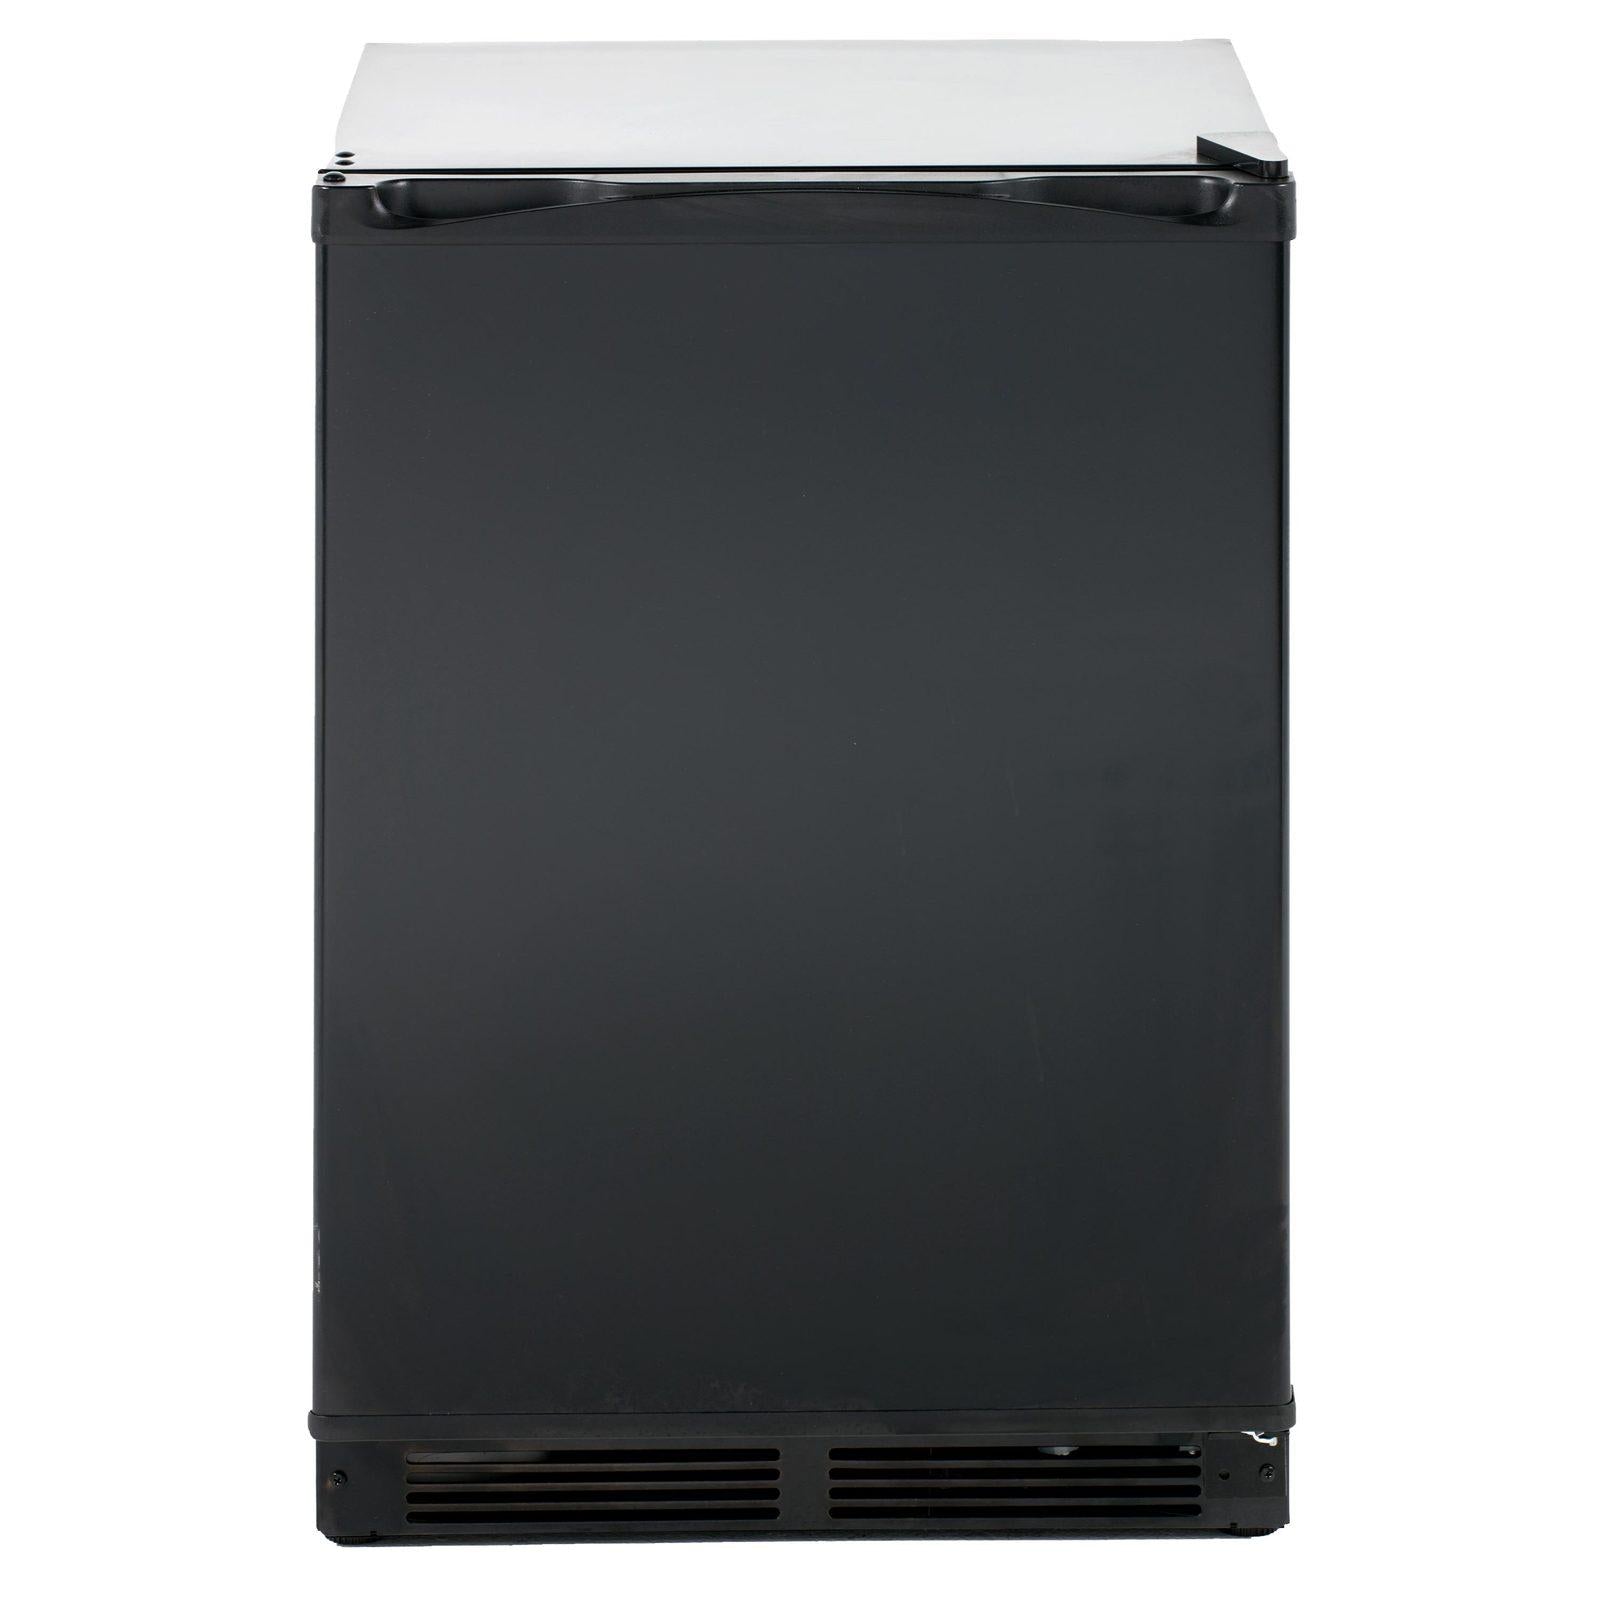 AVANTI RM52T1BB 5.2 cu. ft. Compact Refrigerator